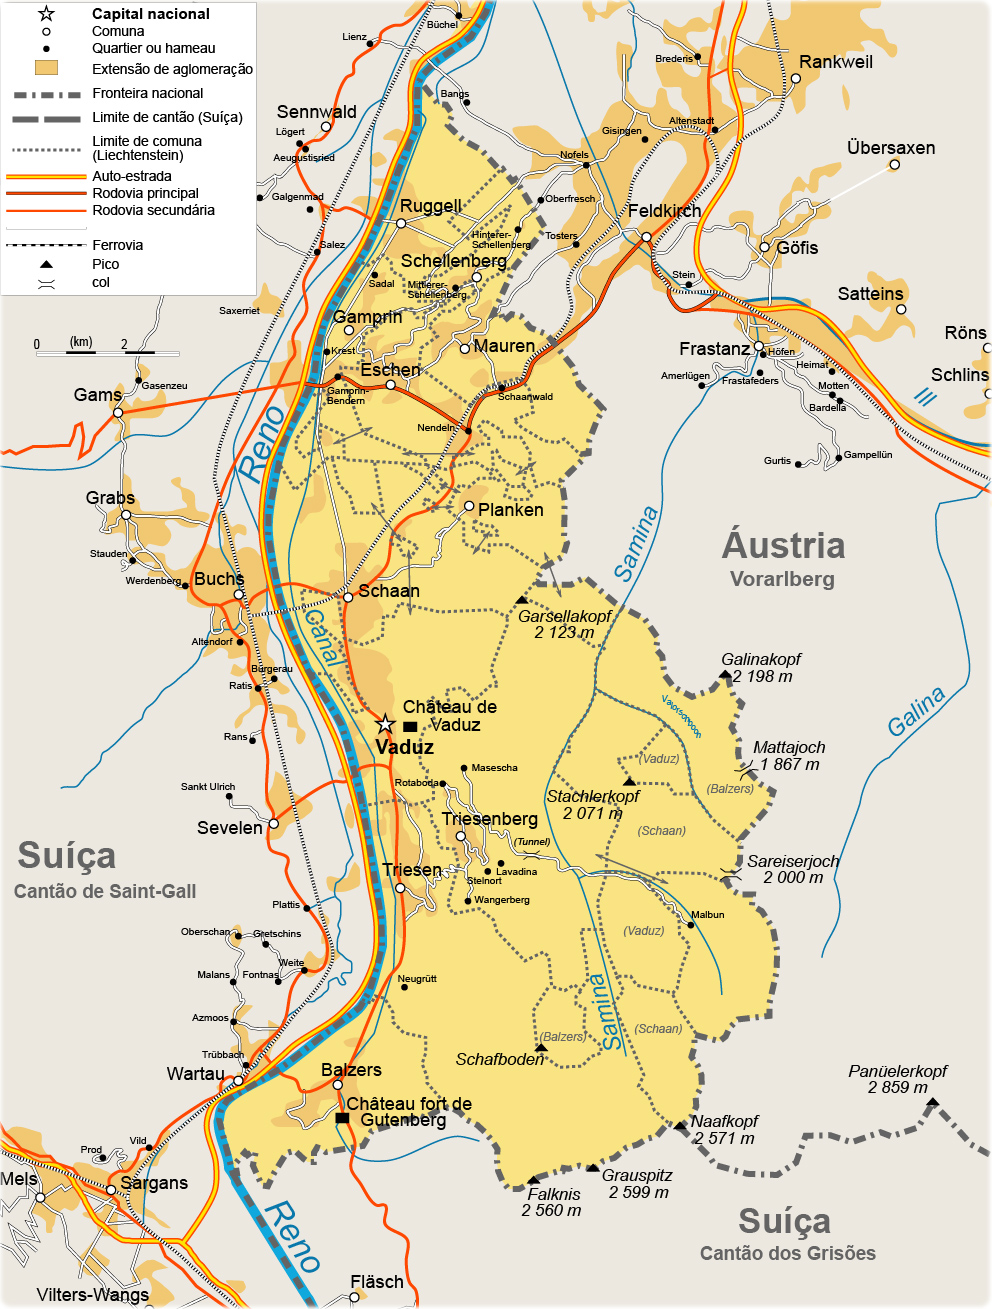 mapa-liechtenstein.jpg